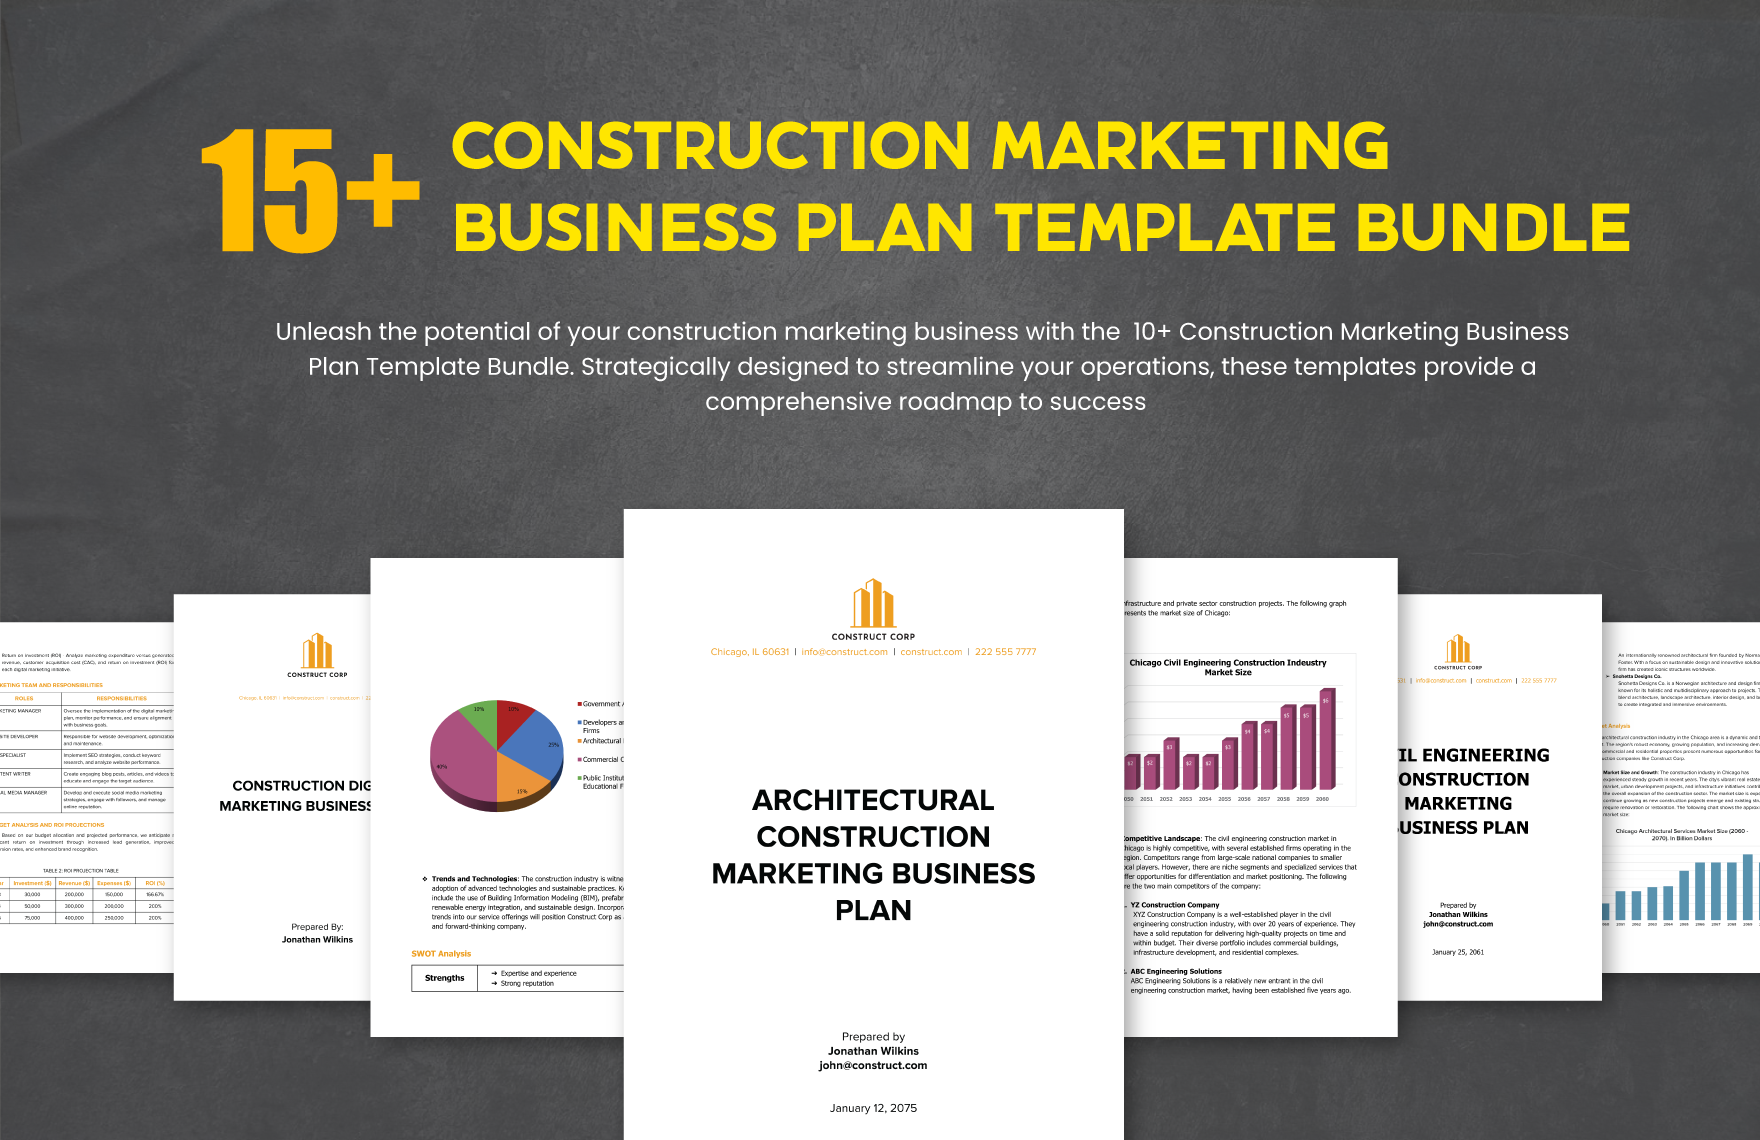 15+ Construction Marketing Business Plan Template Bundle